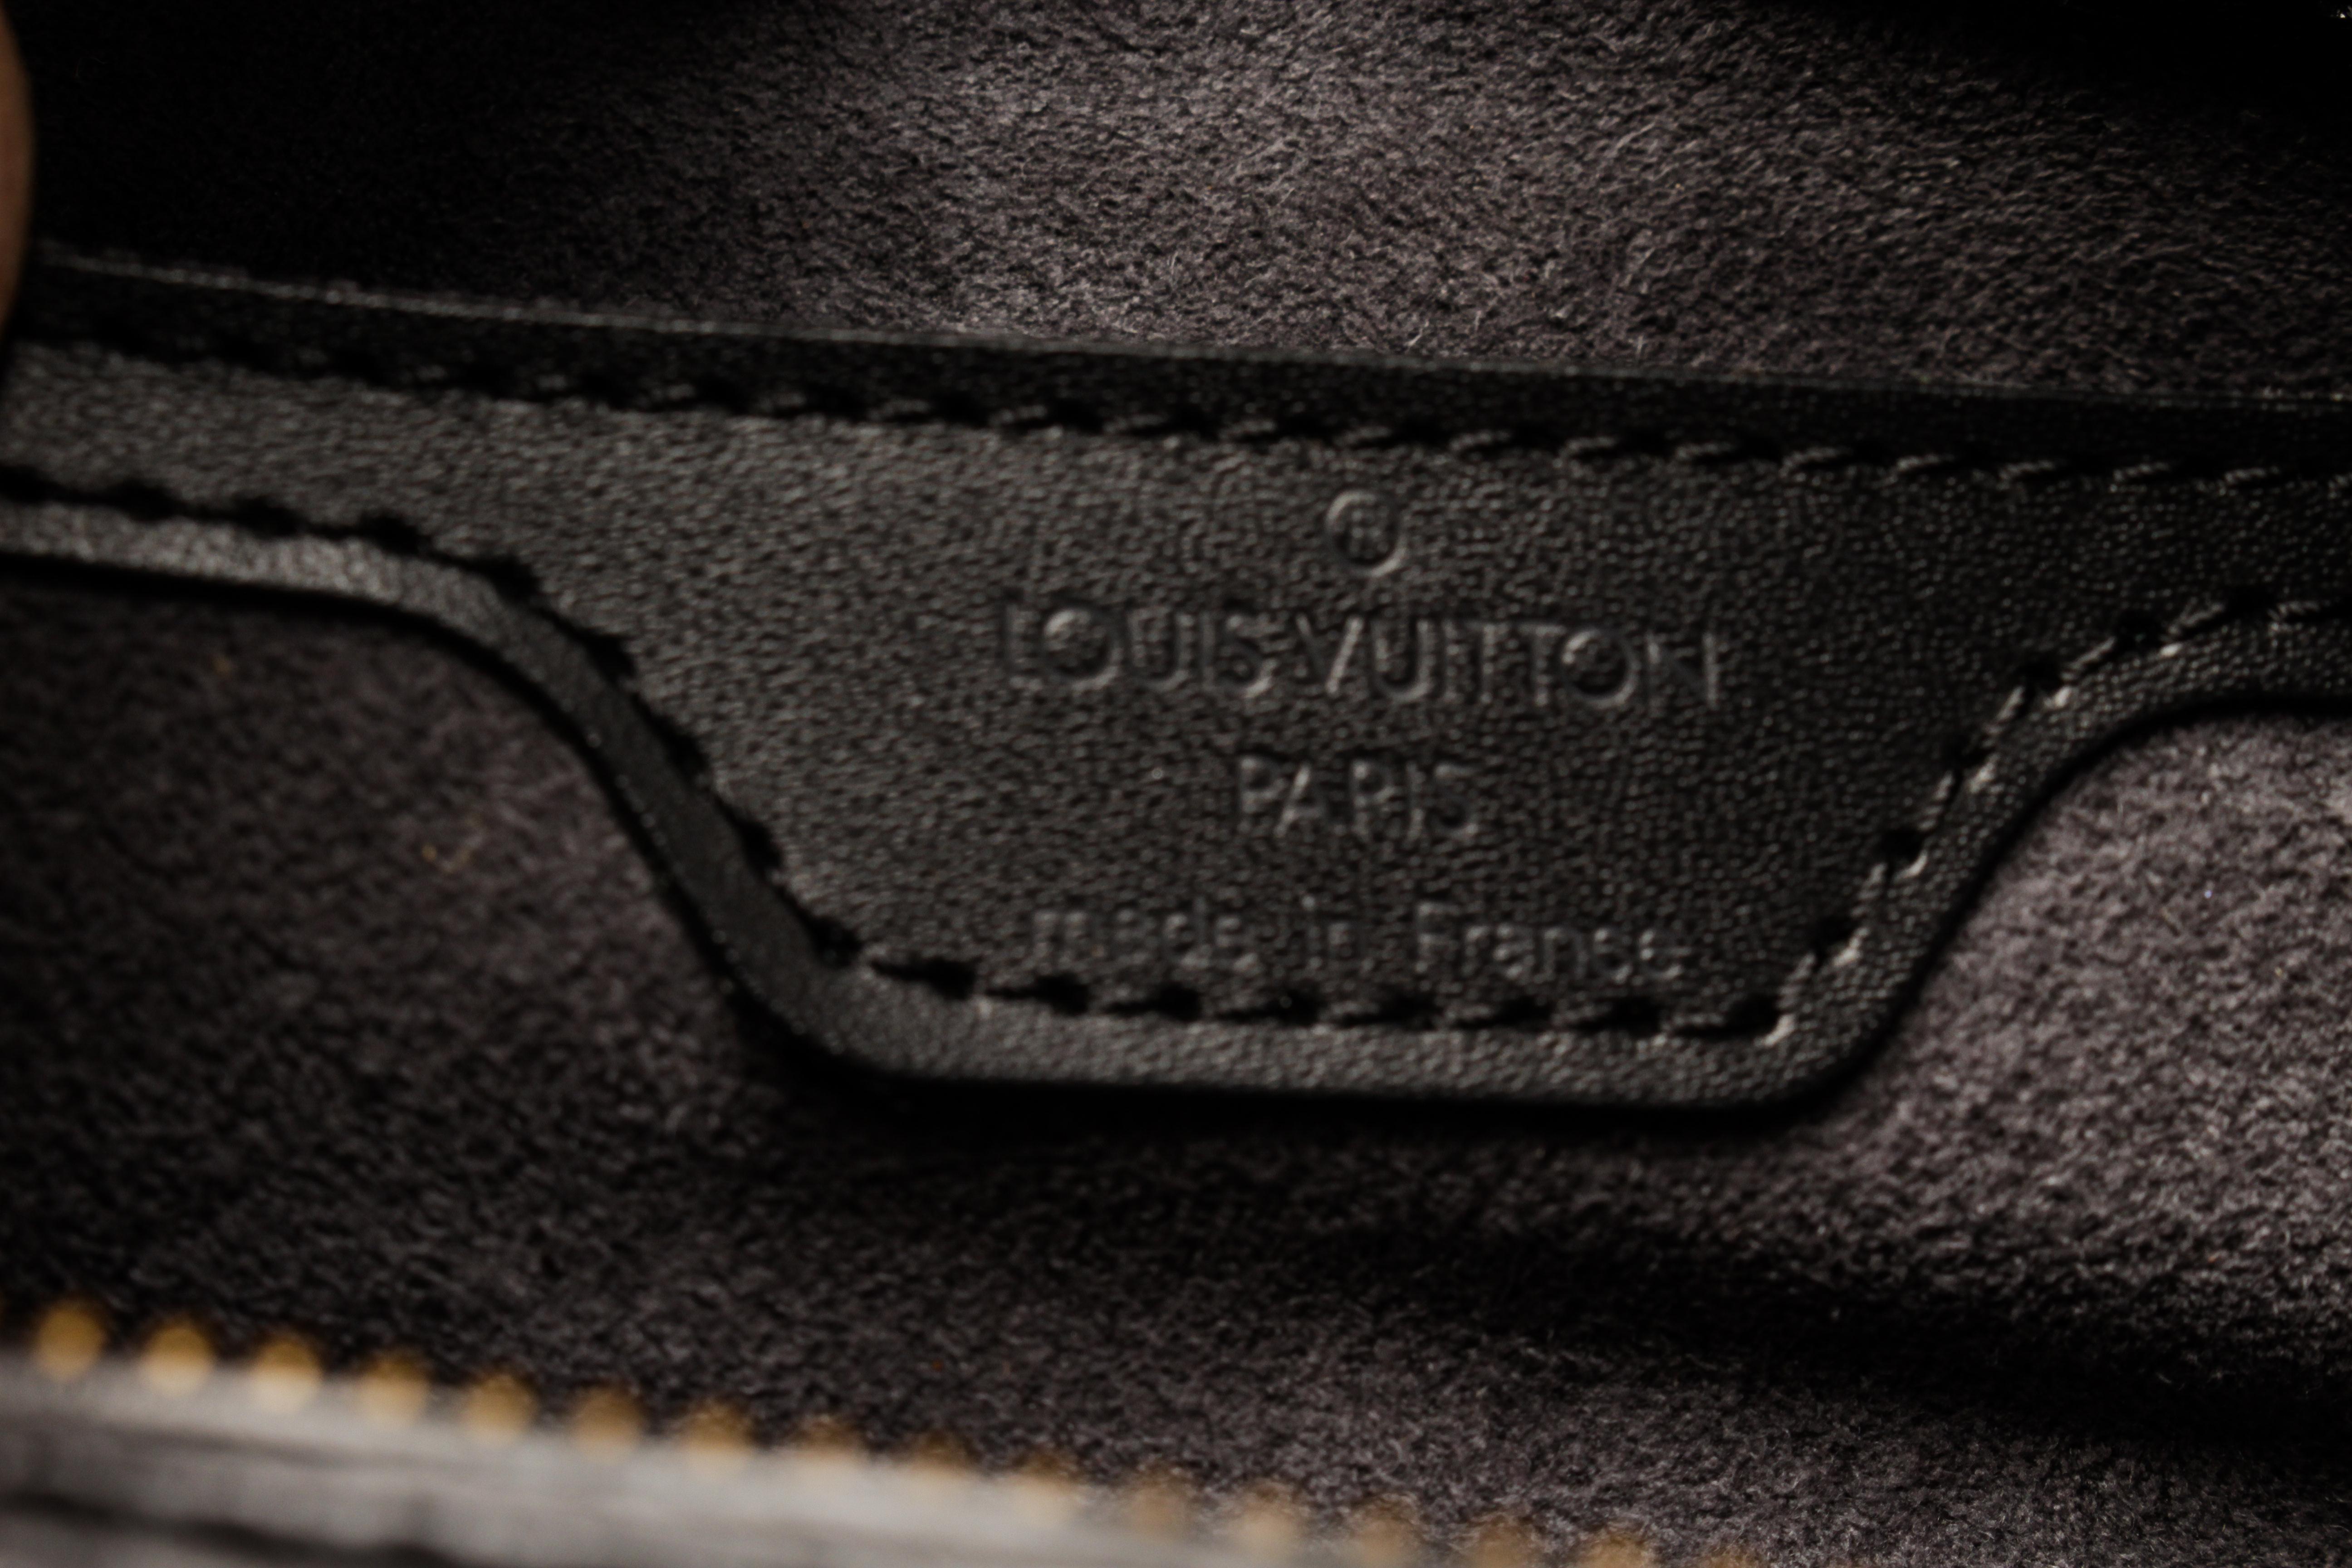 Louis Vuitton Black Epi Leather Soufflot Tote Bag 6